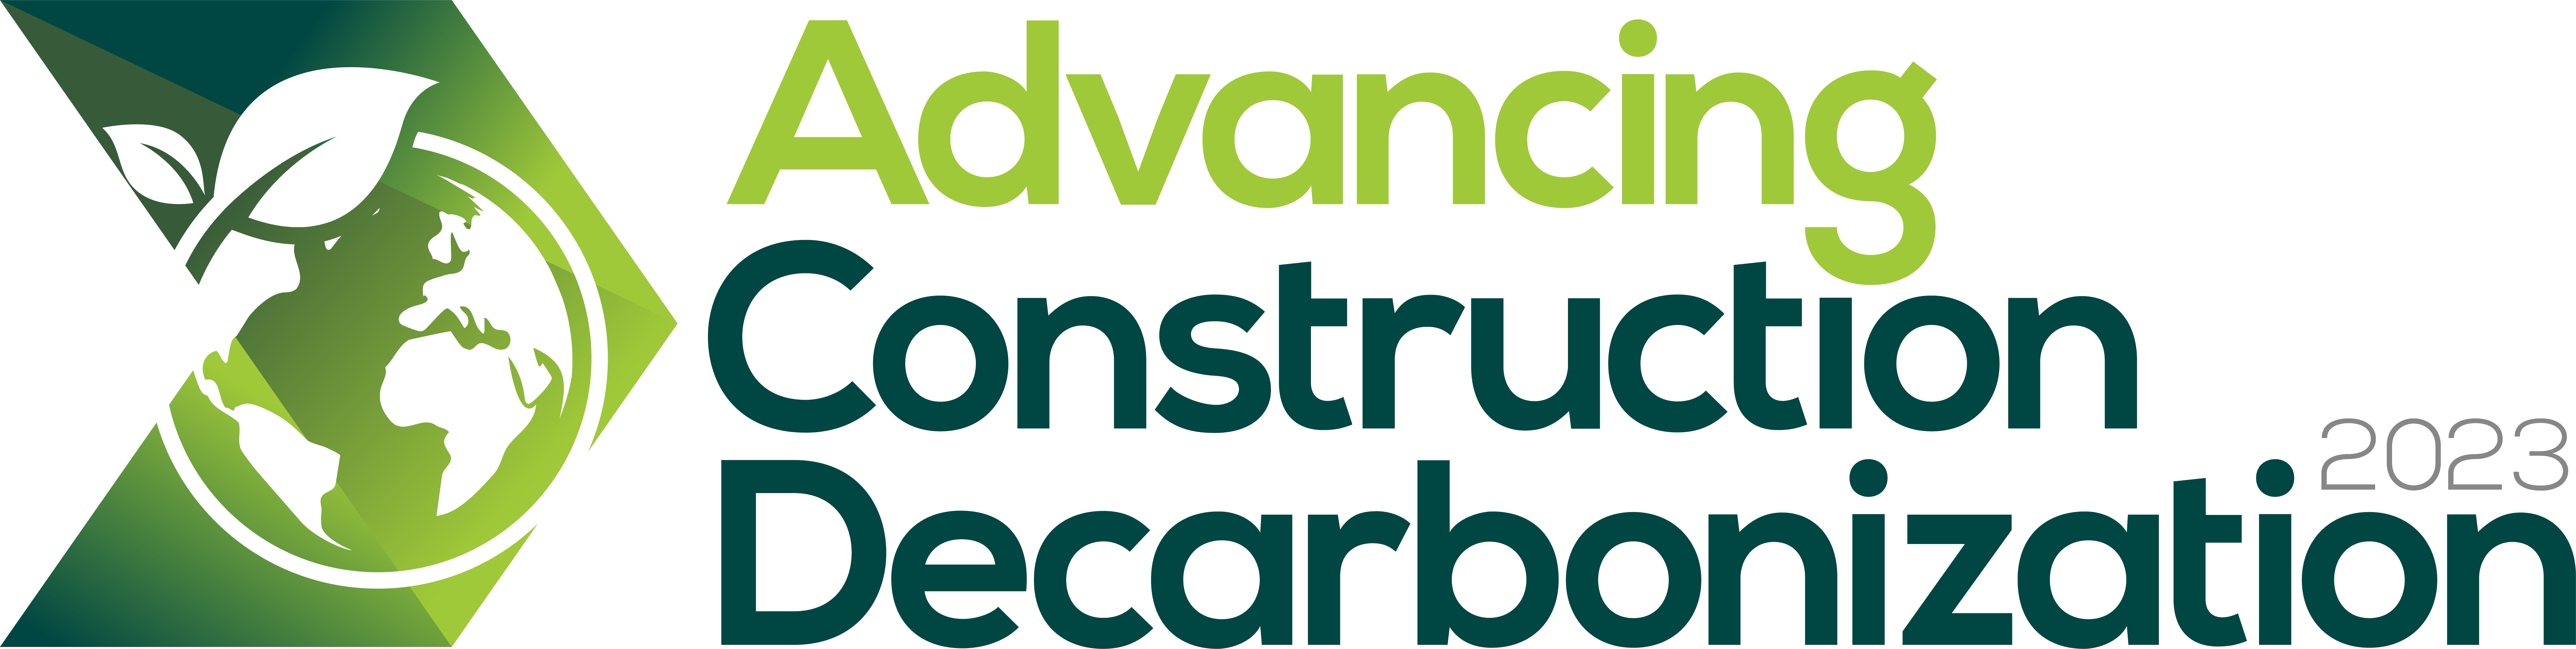 Advancing Construction Decarbonization 2023 Logo